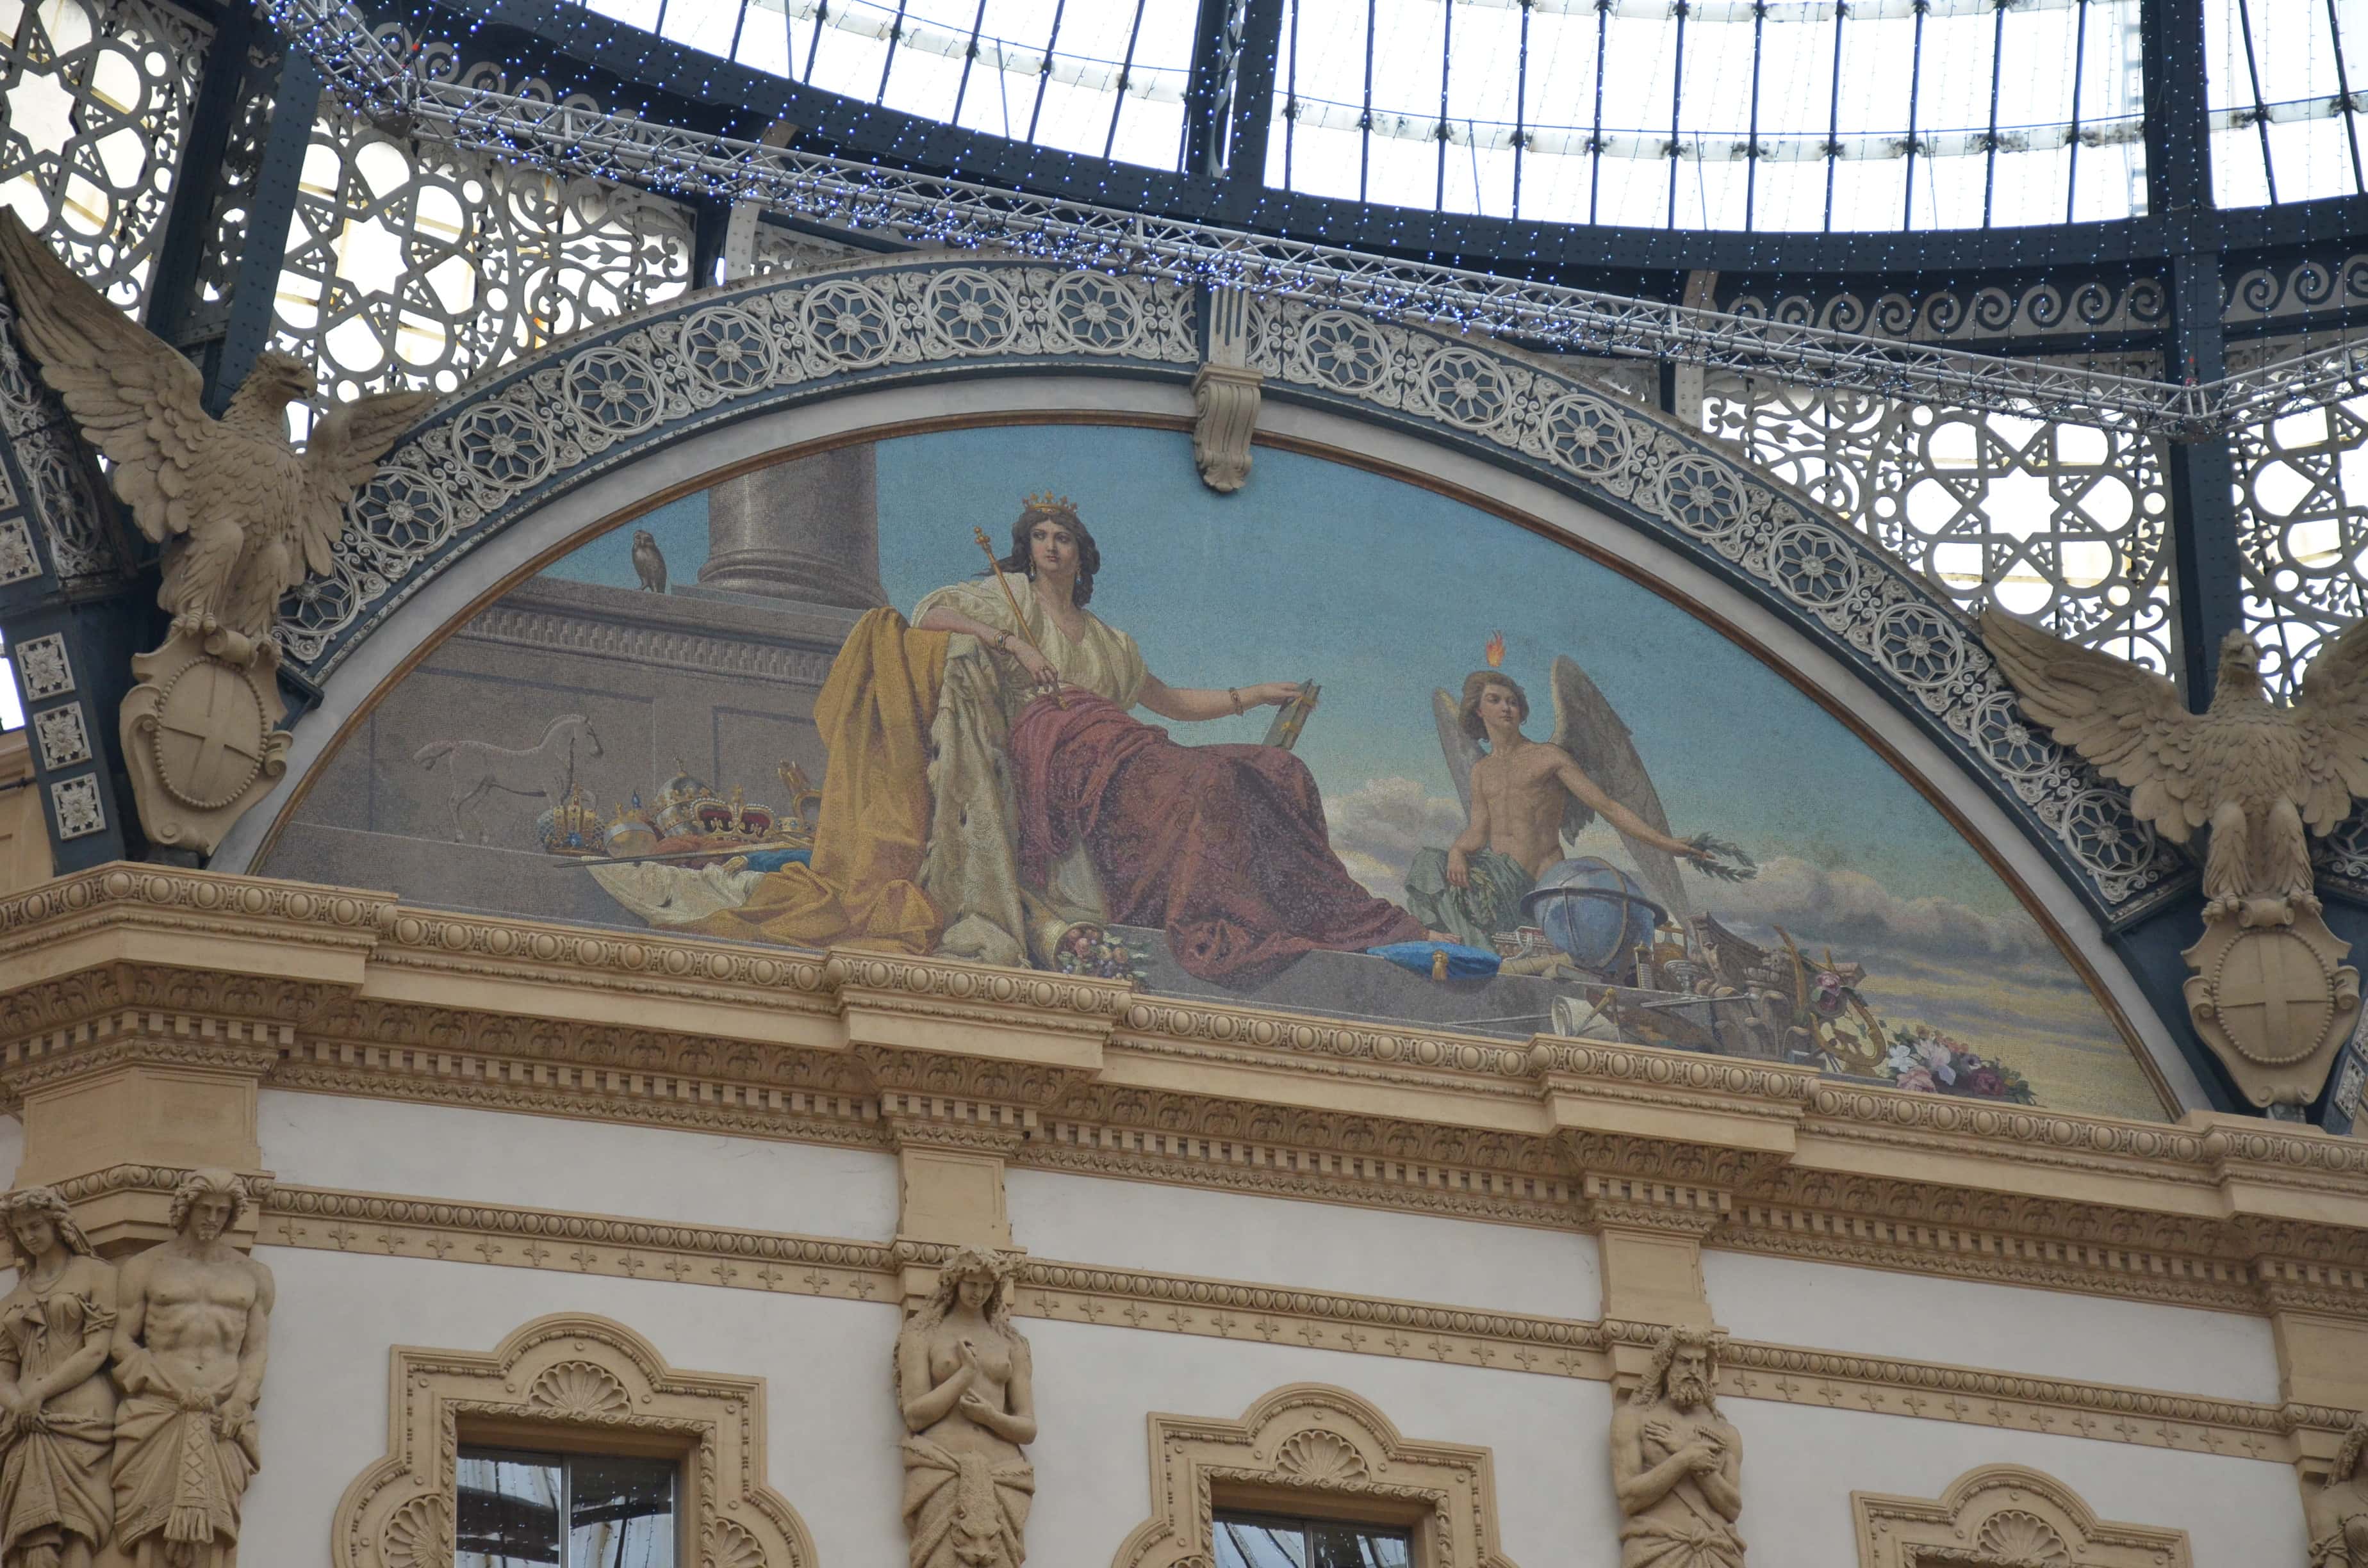 Fresco in the Vittorio Emanuele II Gallery in Milan, Italy